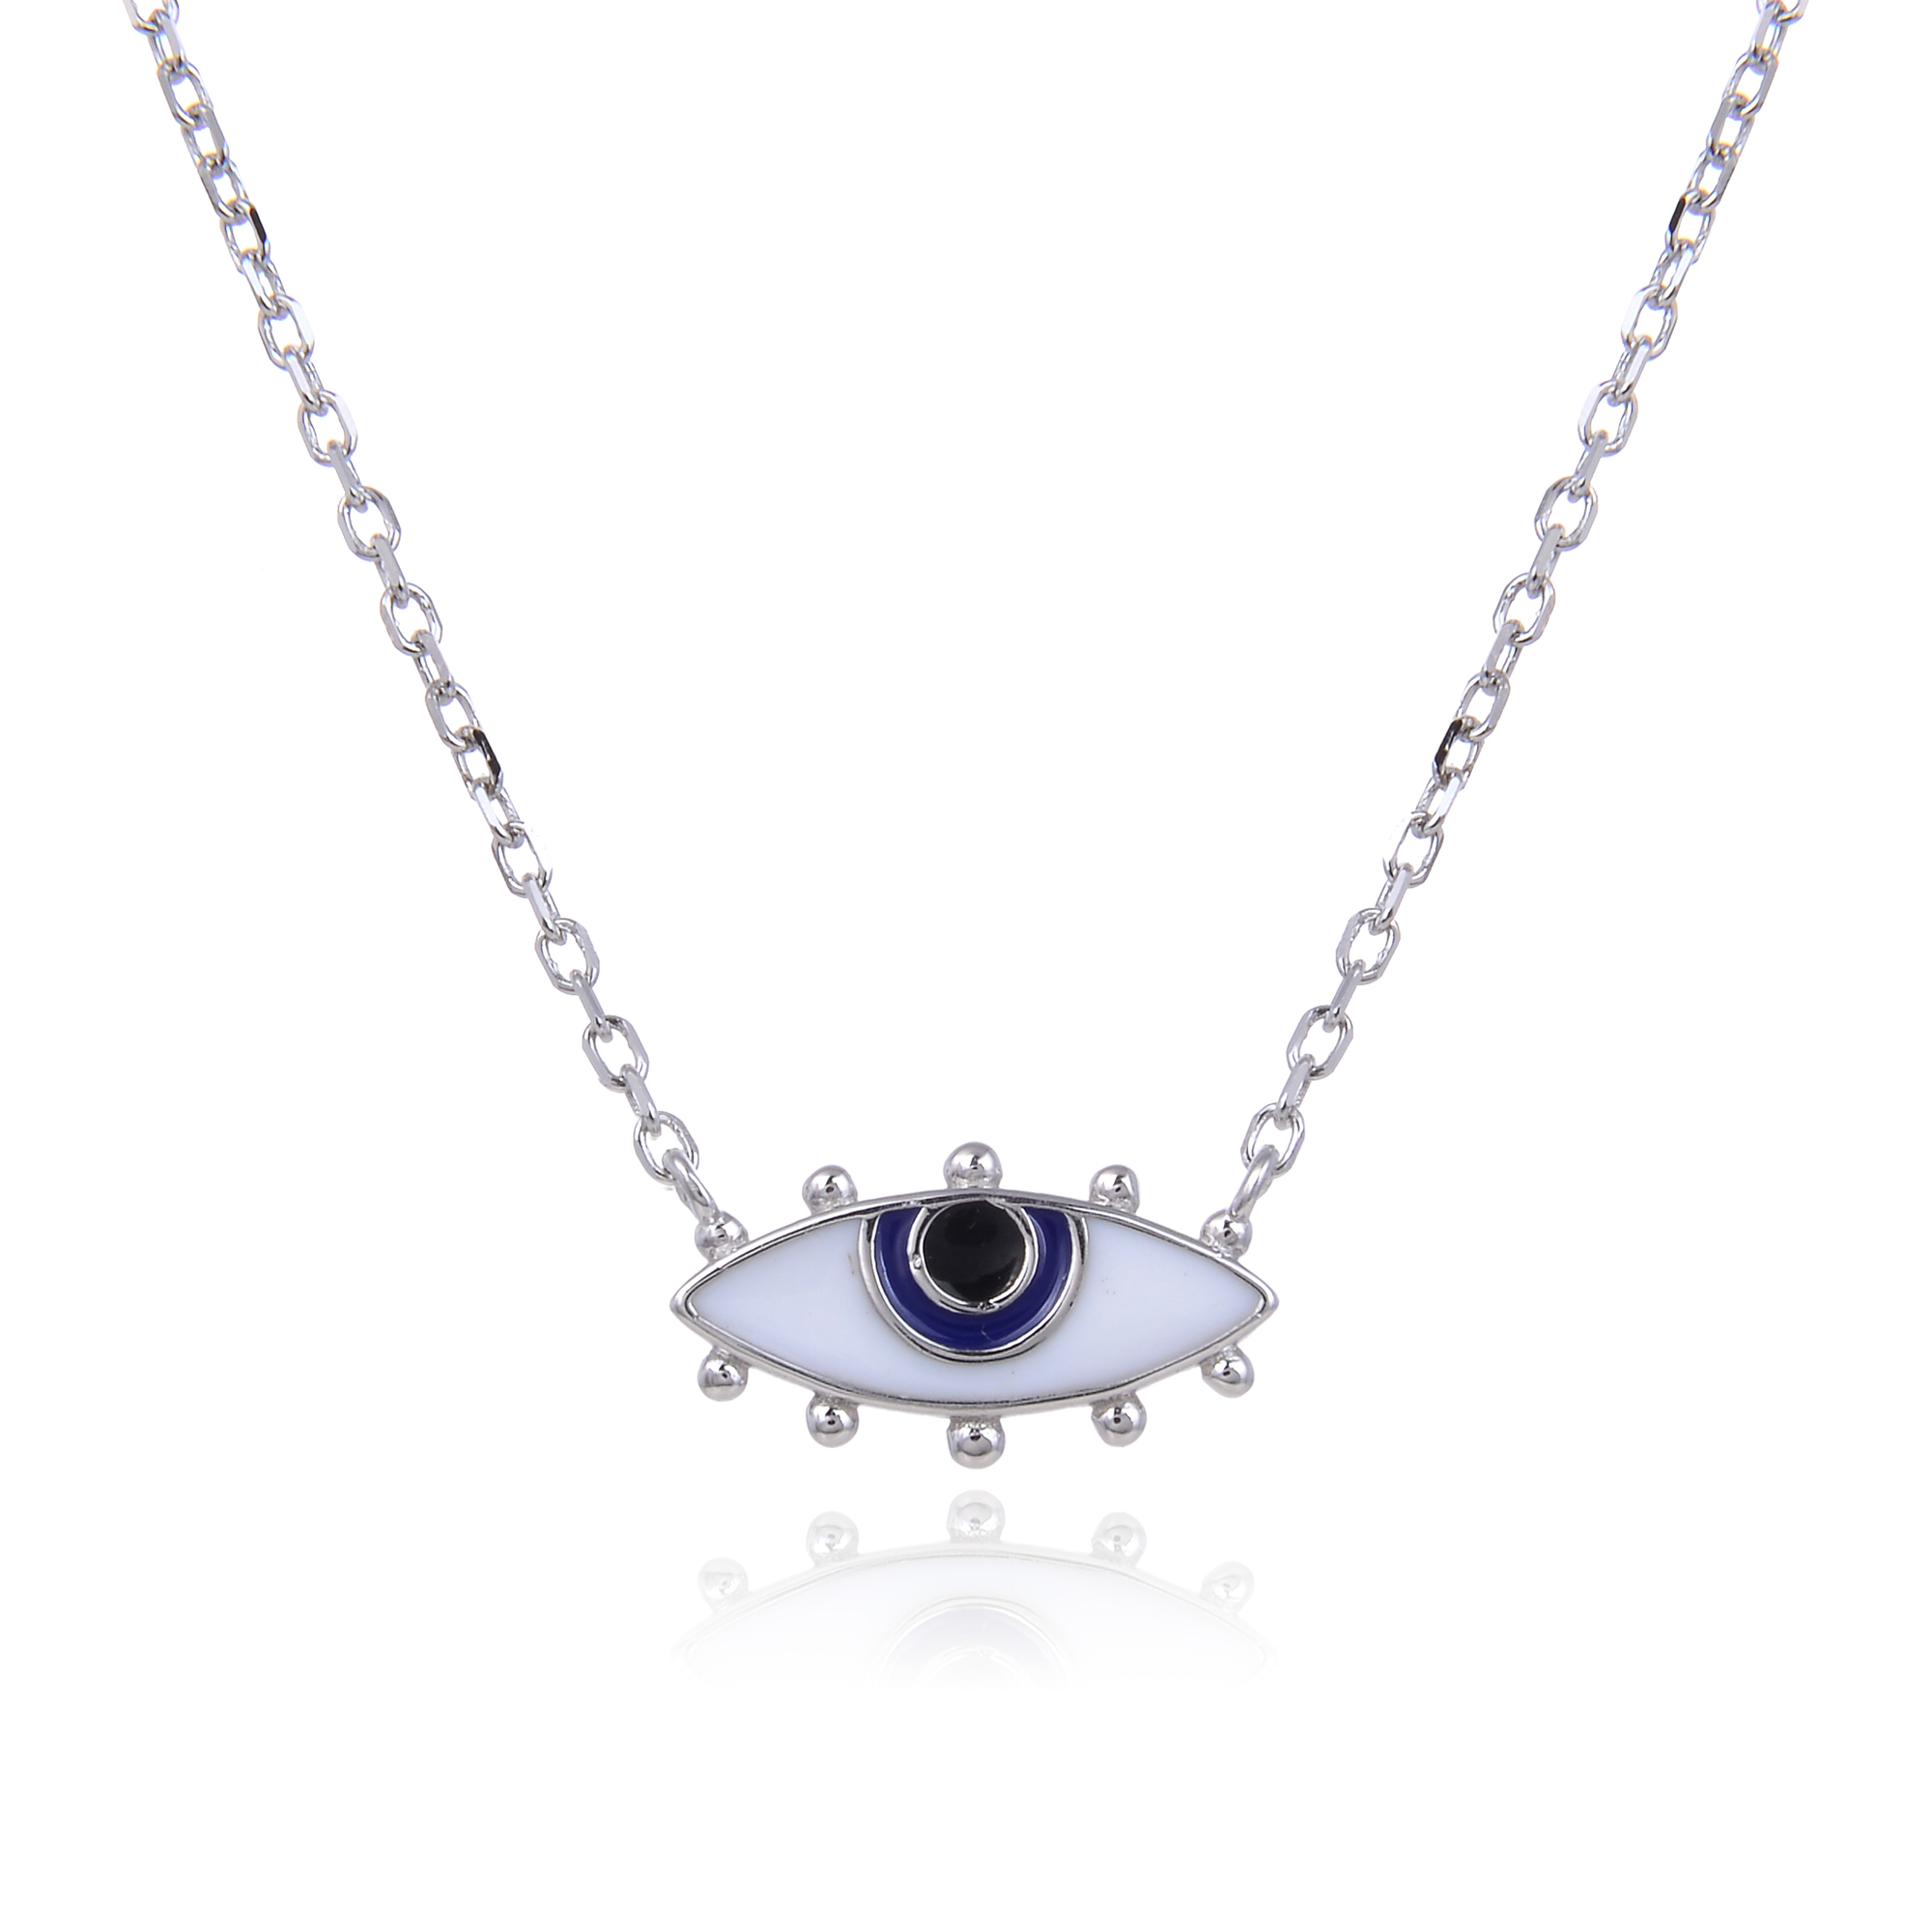 Blue Eyes Necklace - penelope-it.com